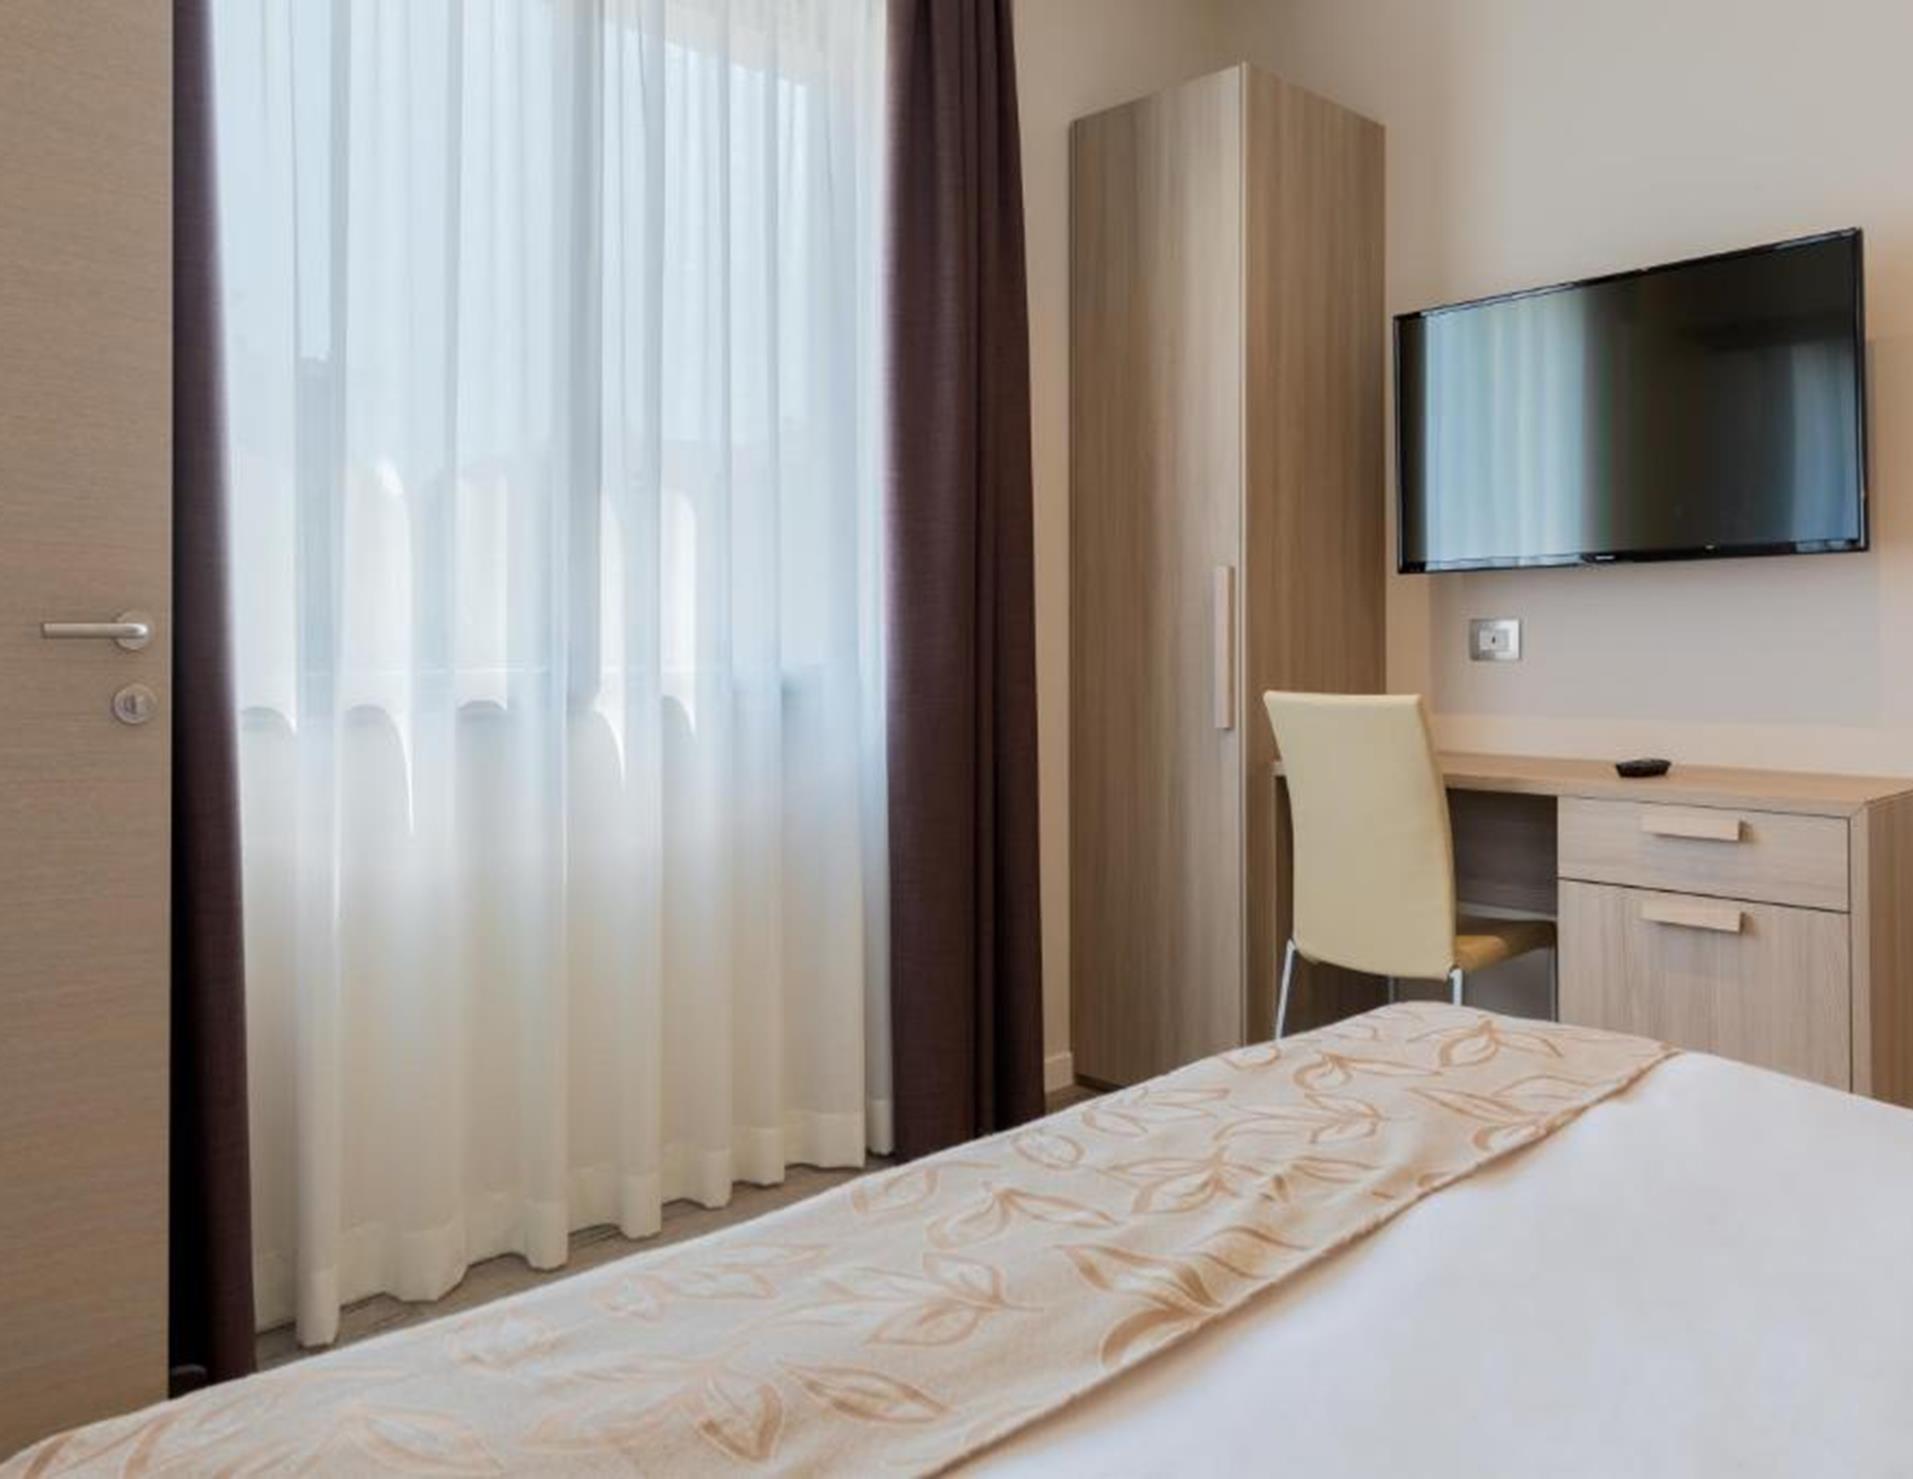 Quality Hotel Delfino - Room 3